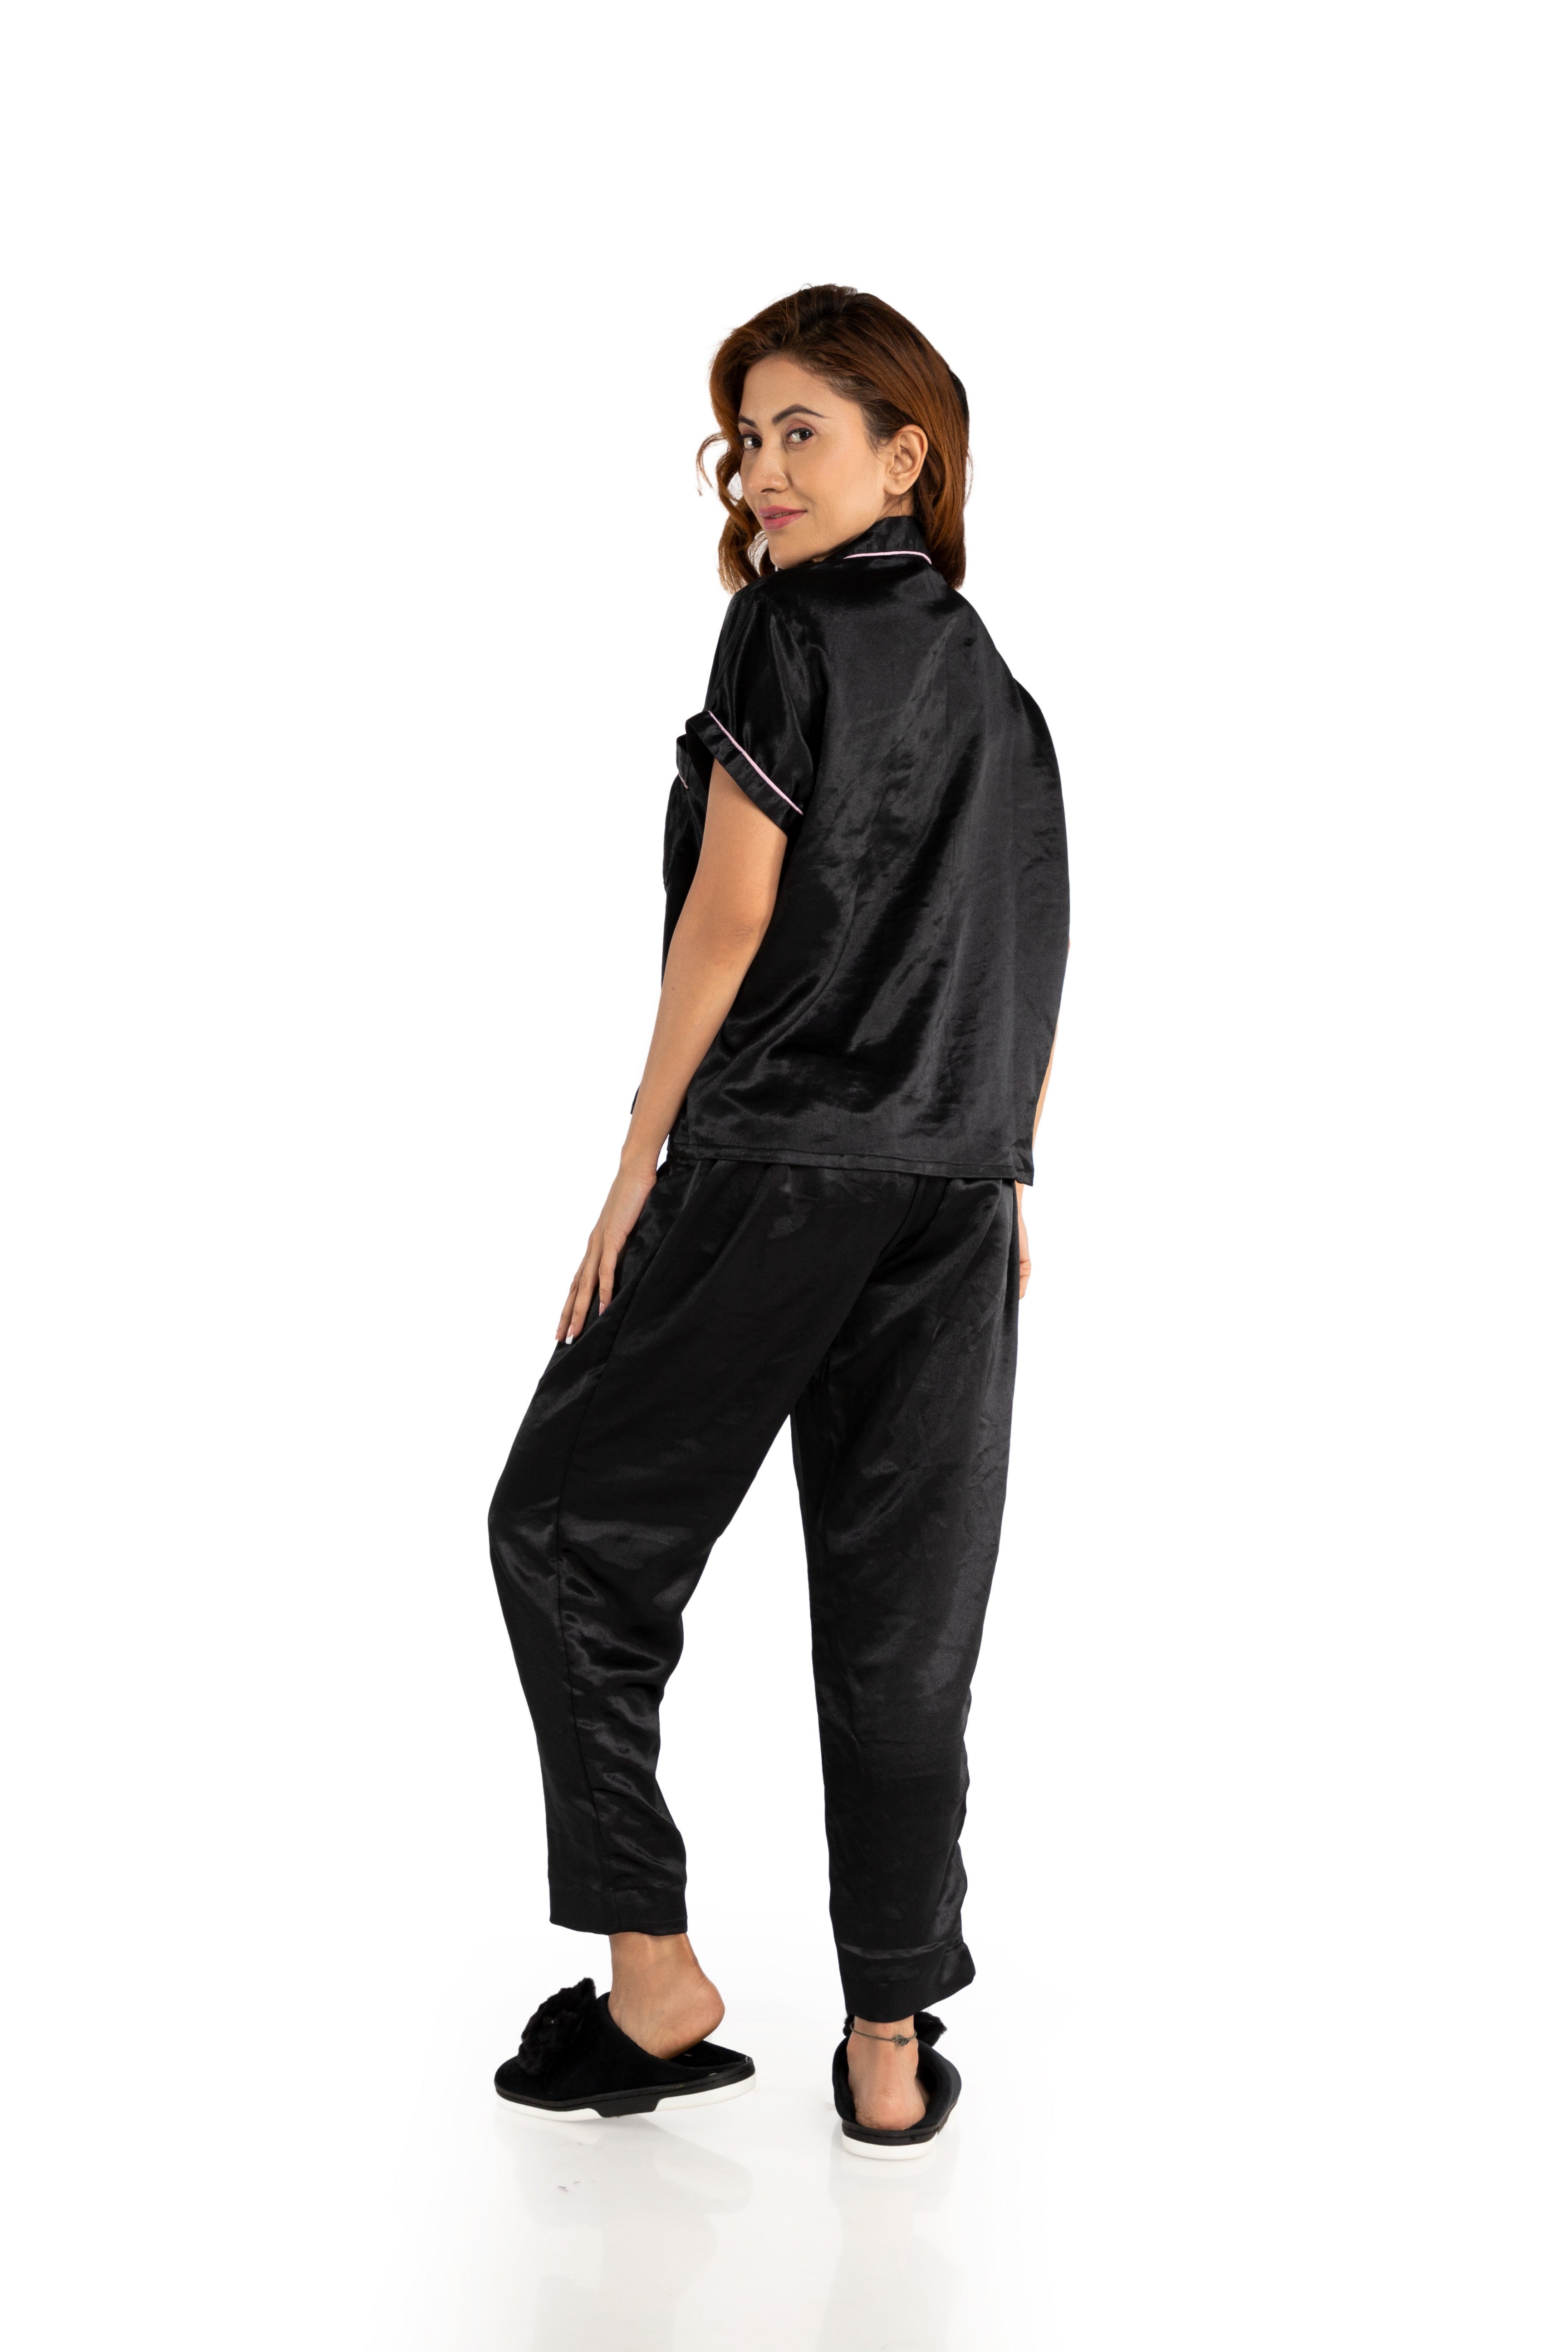 Black Full Length Satin Nightwear Set